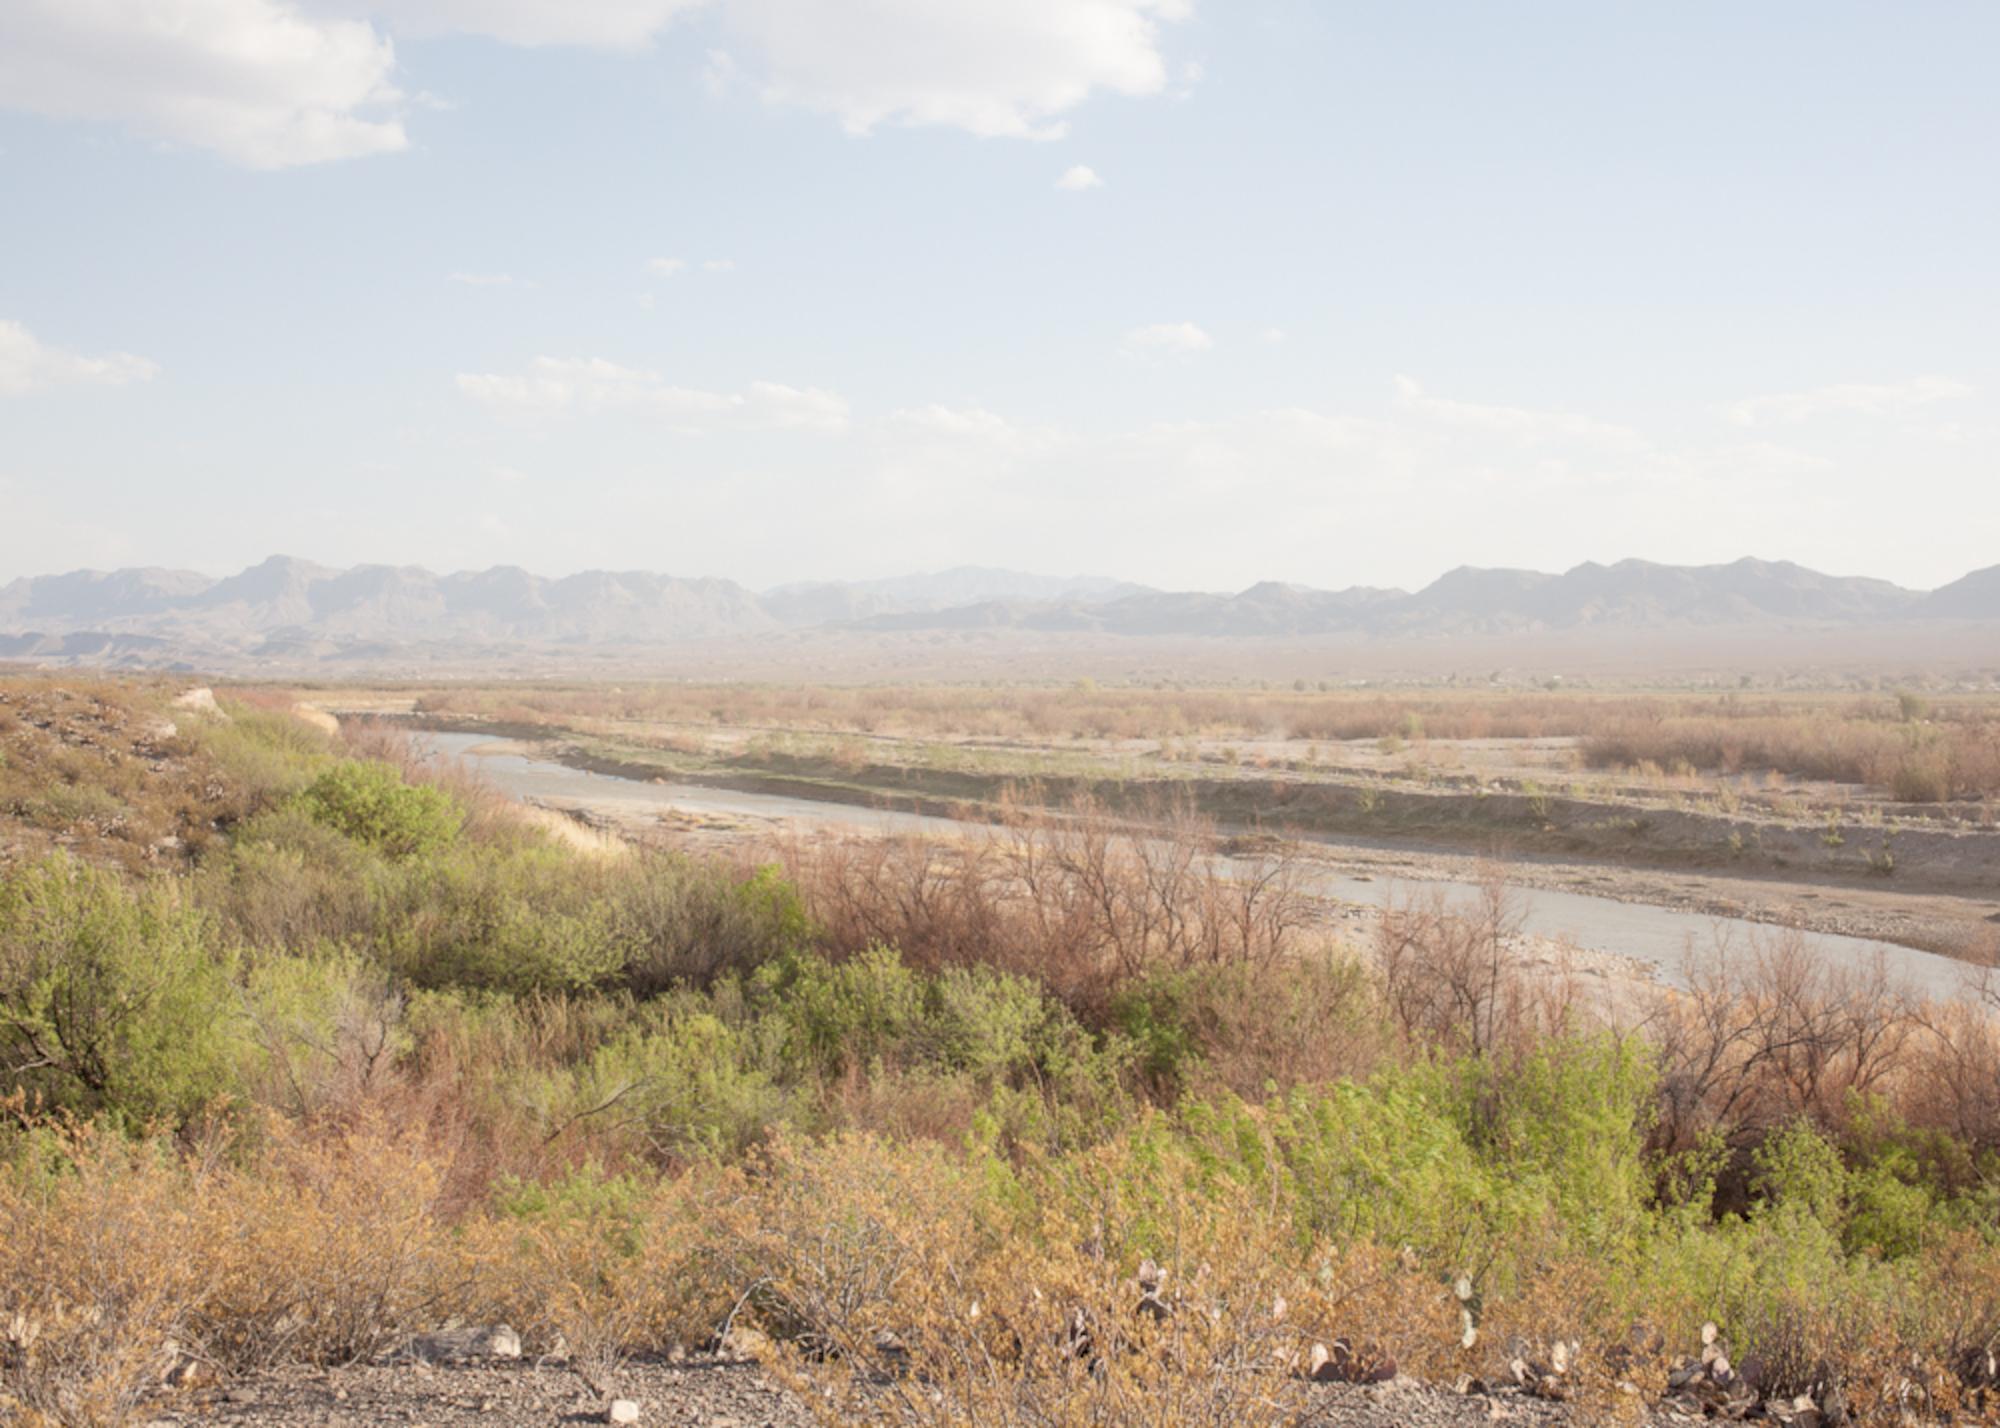 Jason Reed Color Photograph - The Border, Rio Grande River - 21st C. American Landscape Photography